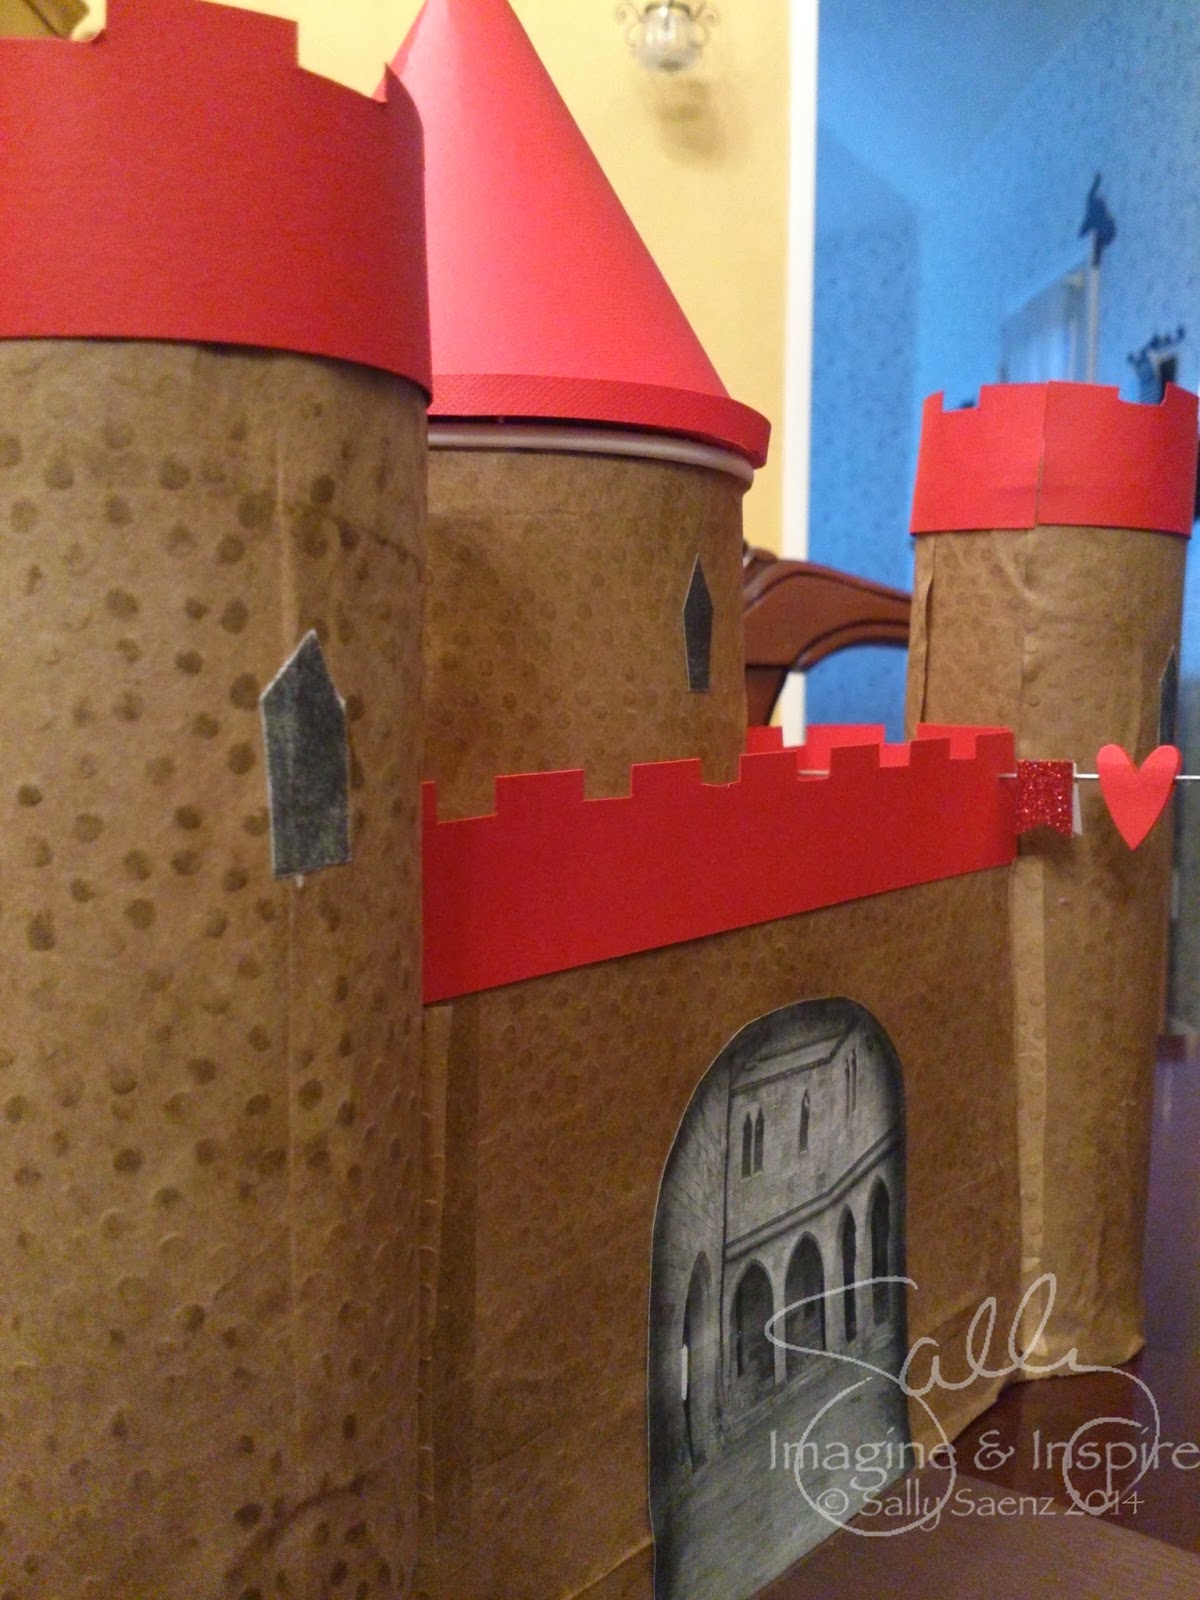 Imagine & Inspire Valentine Castle